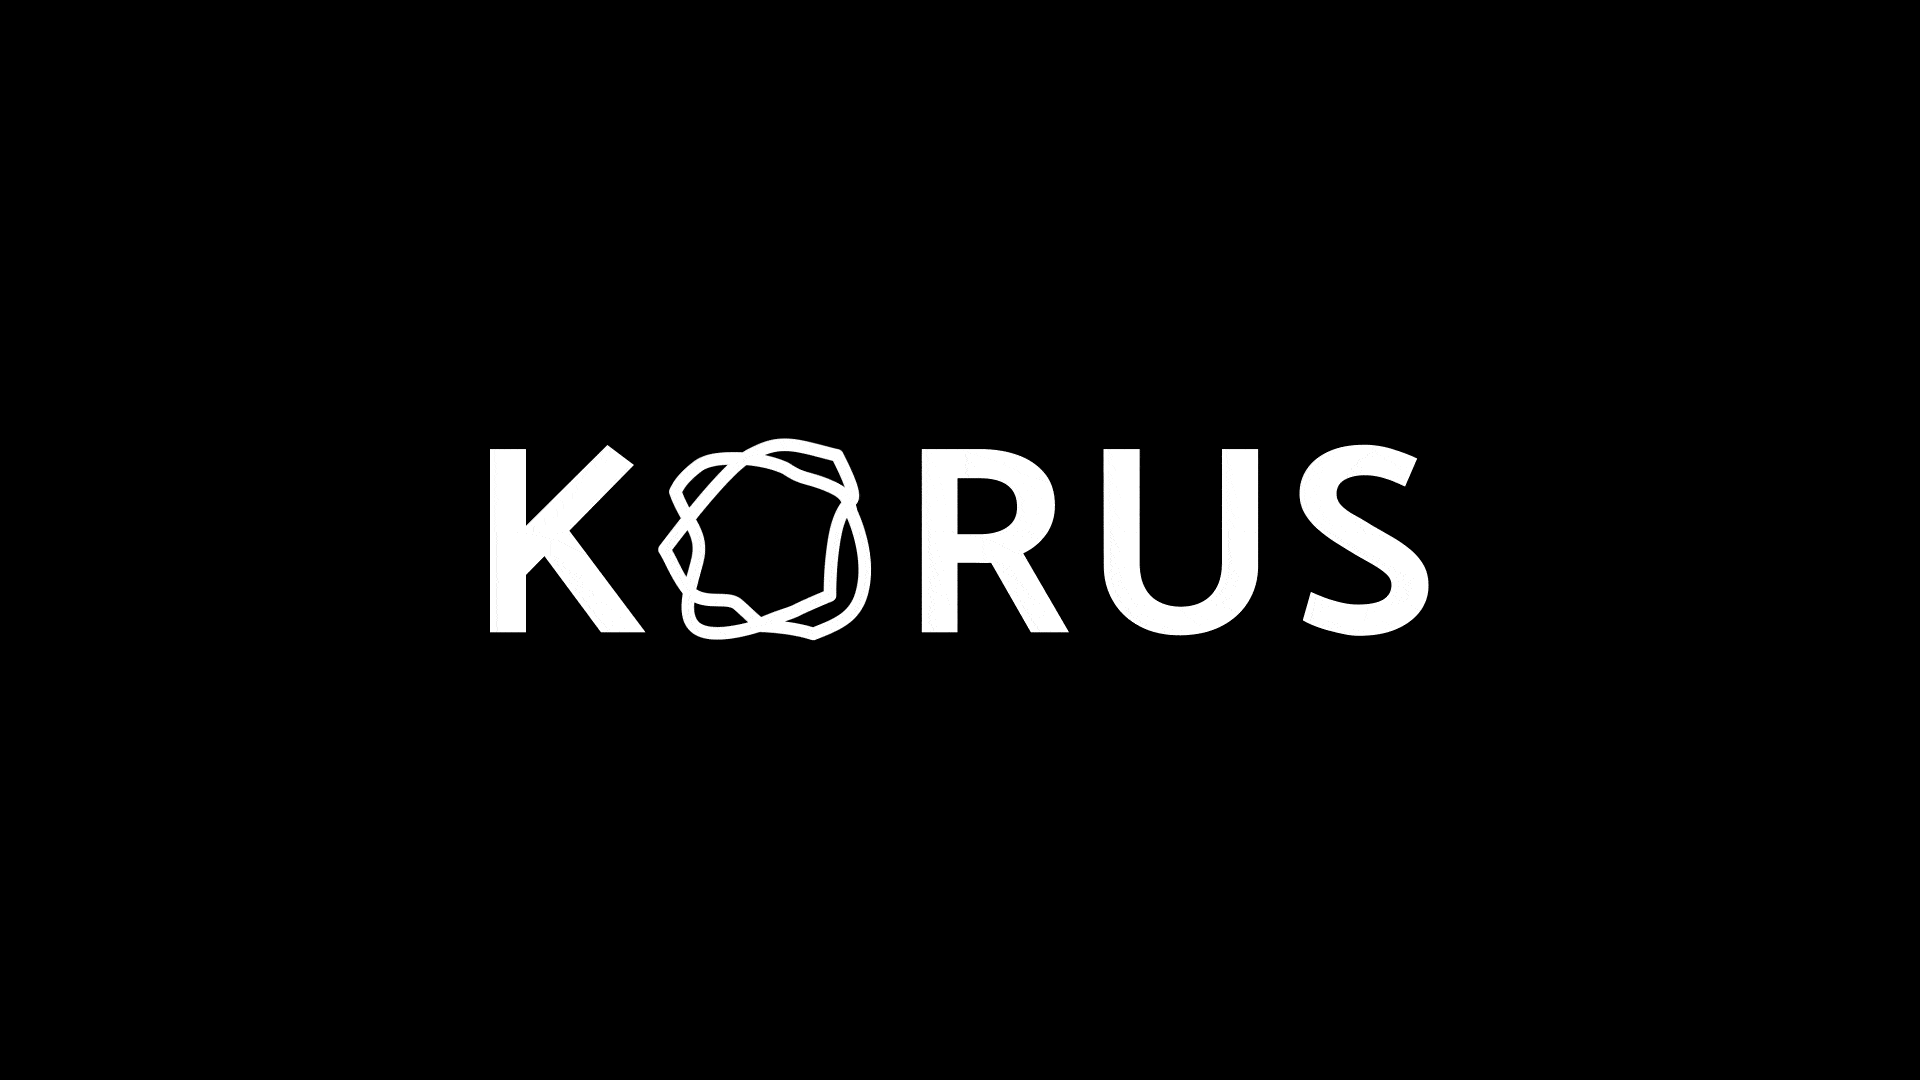 Visual identity for KORUS